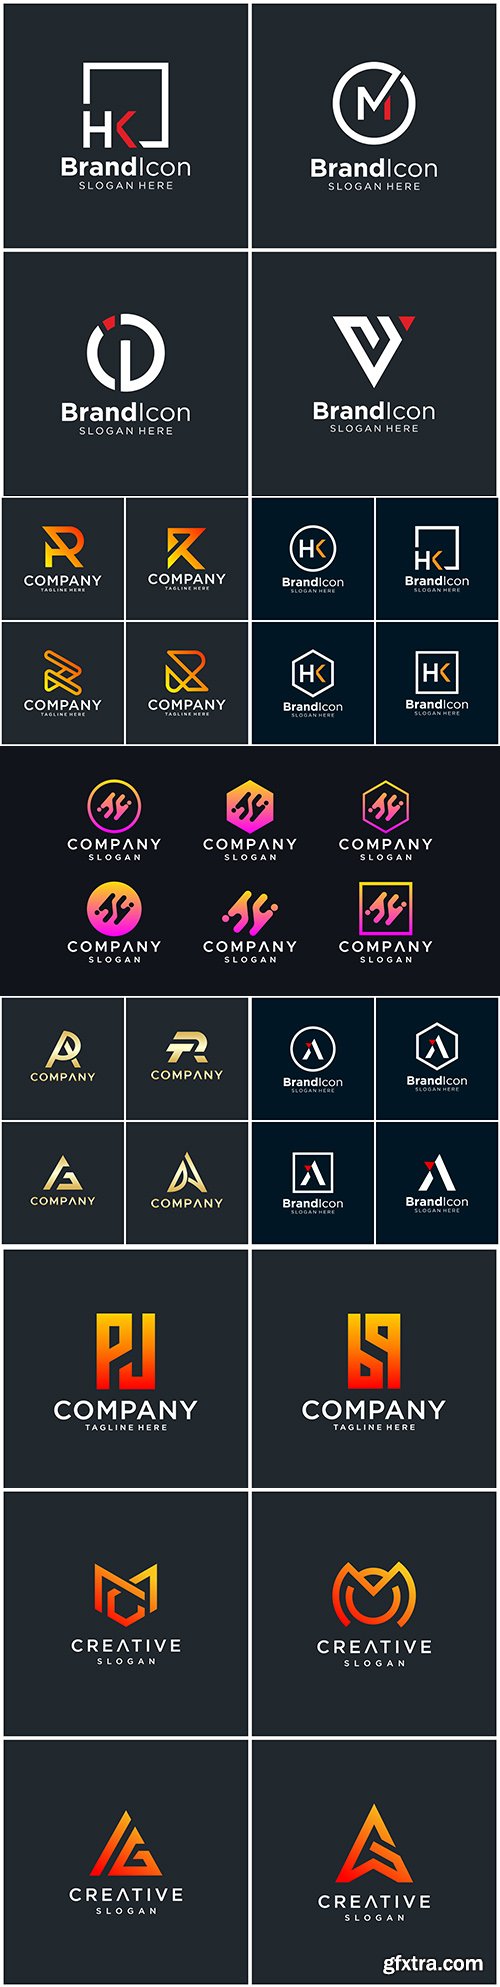 Brand name company logos business corporate design 40